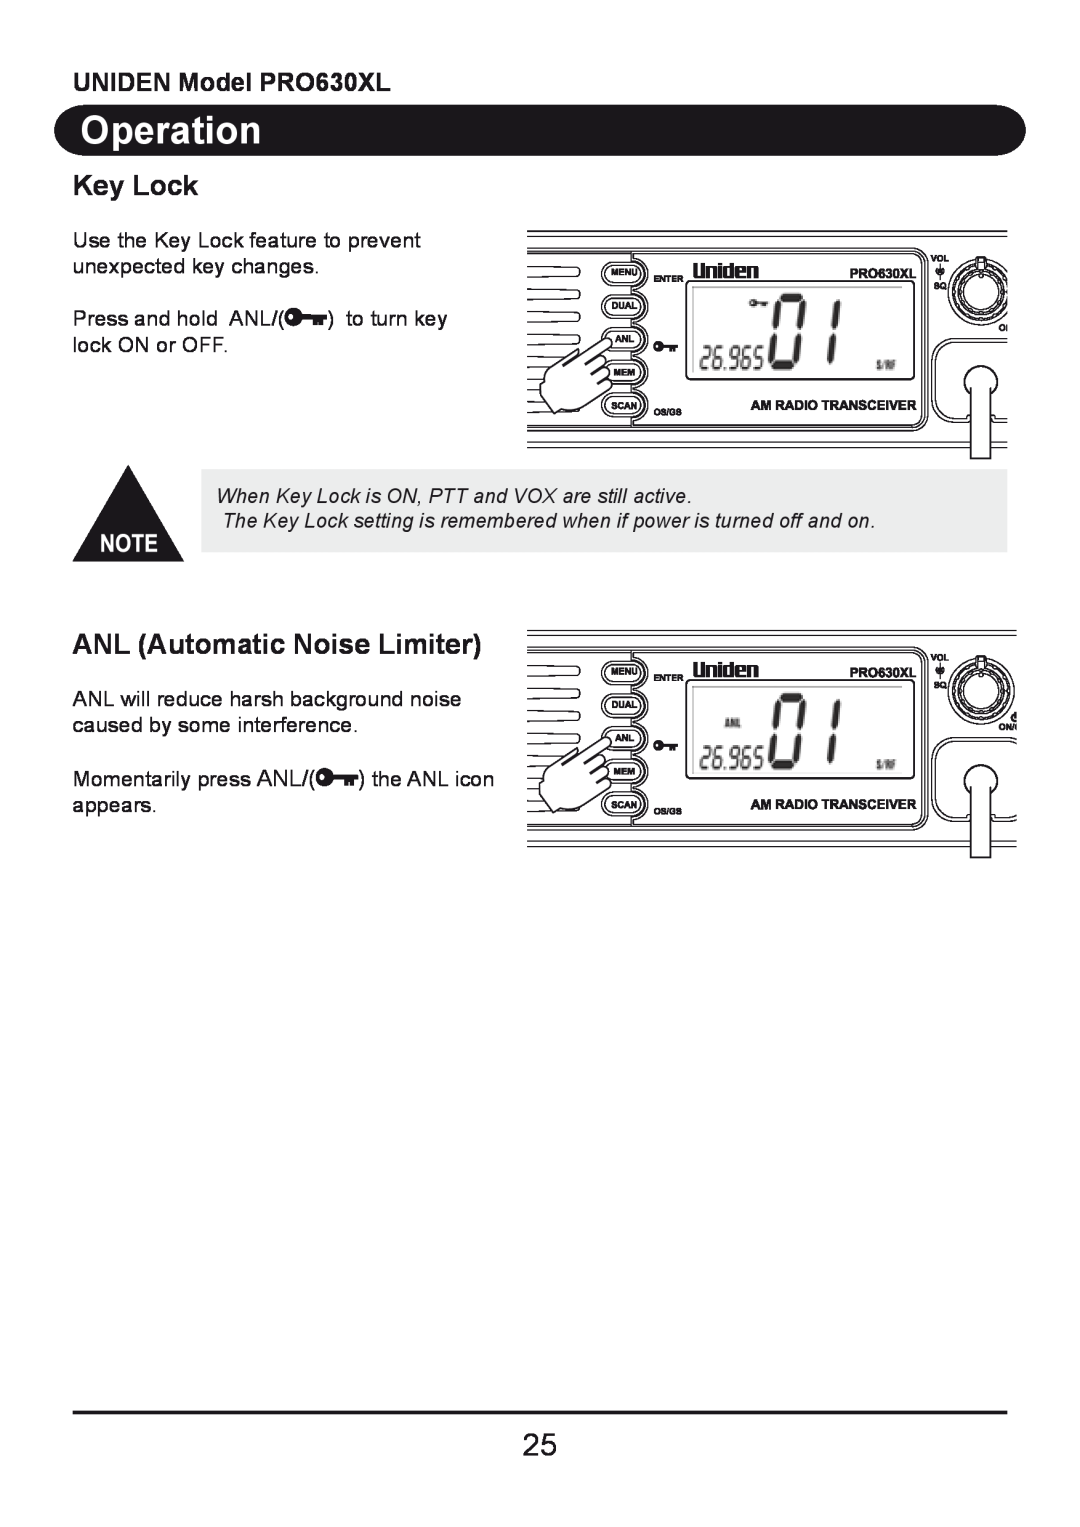 Uniden owner manual Key Lock, ANL Automatic Noise Limiter, Operation, UNIDEN Model PRO630XL 